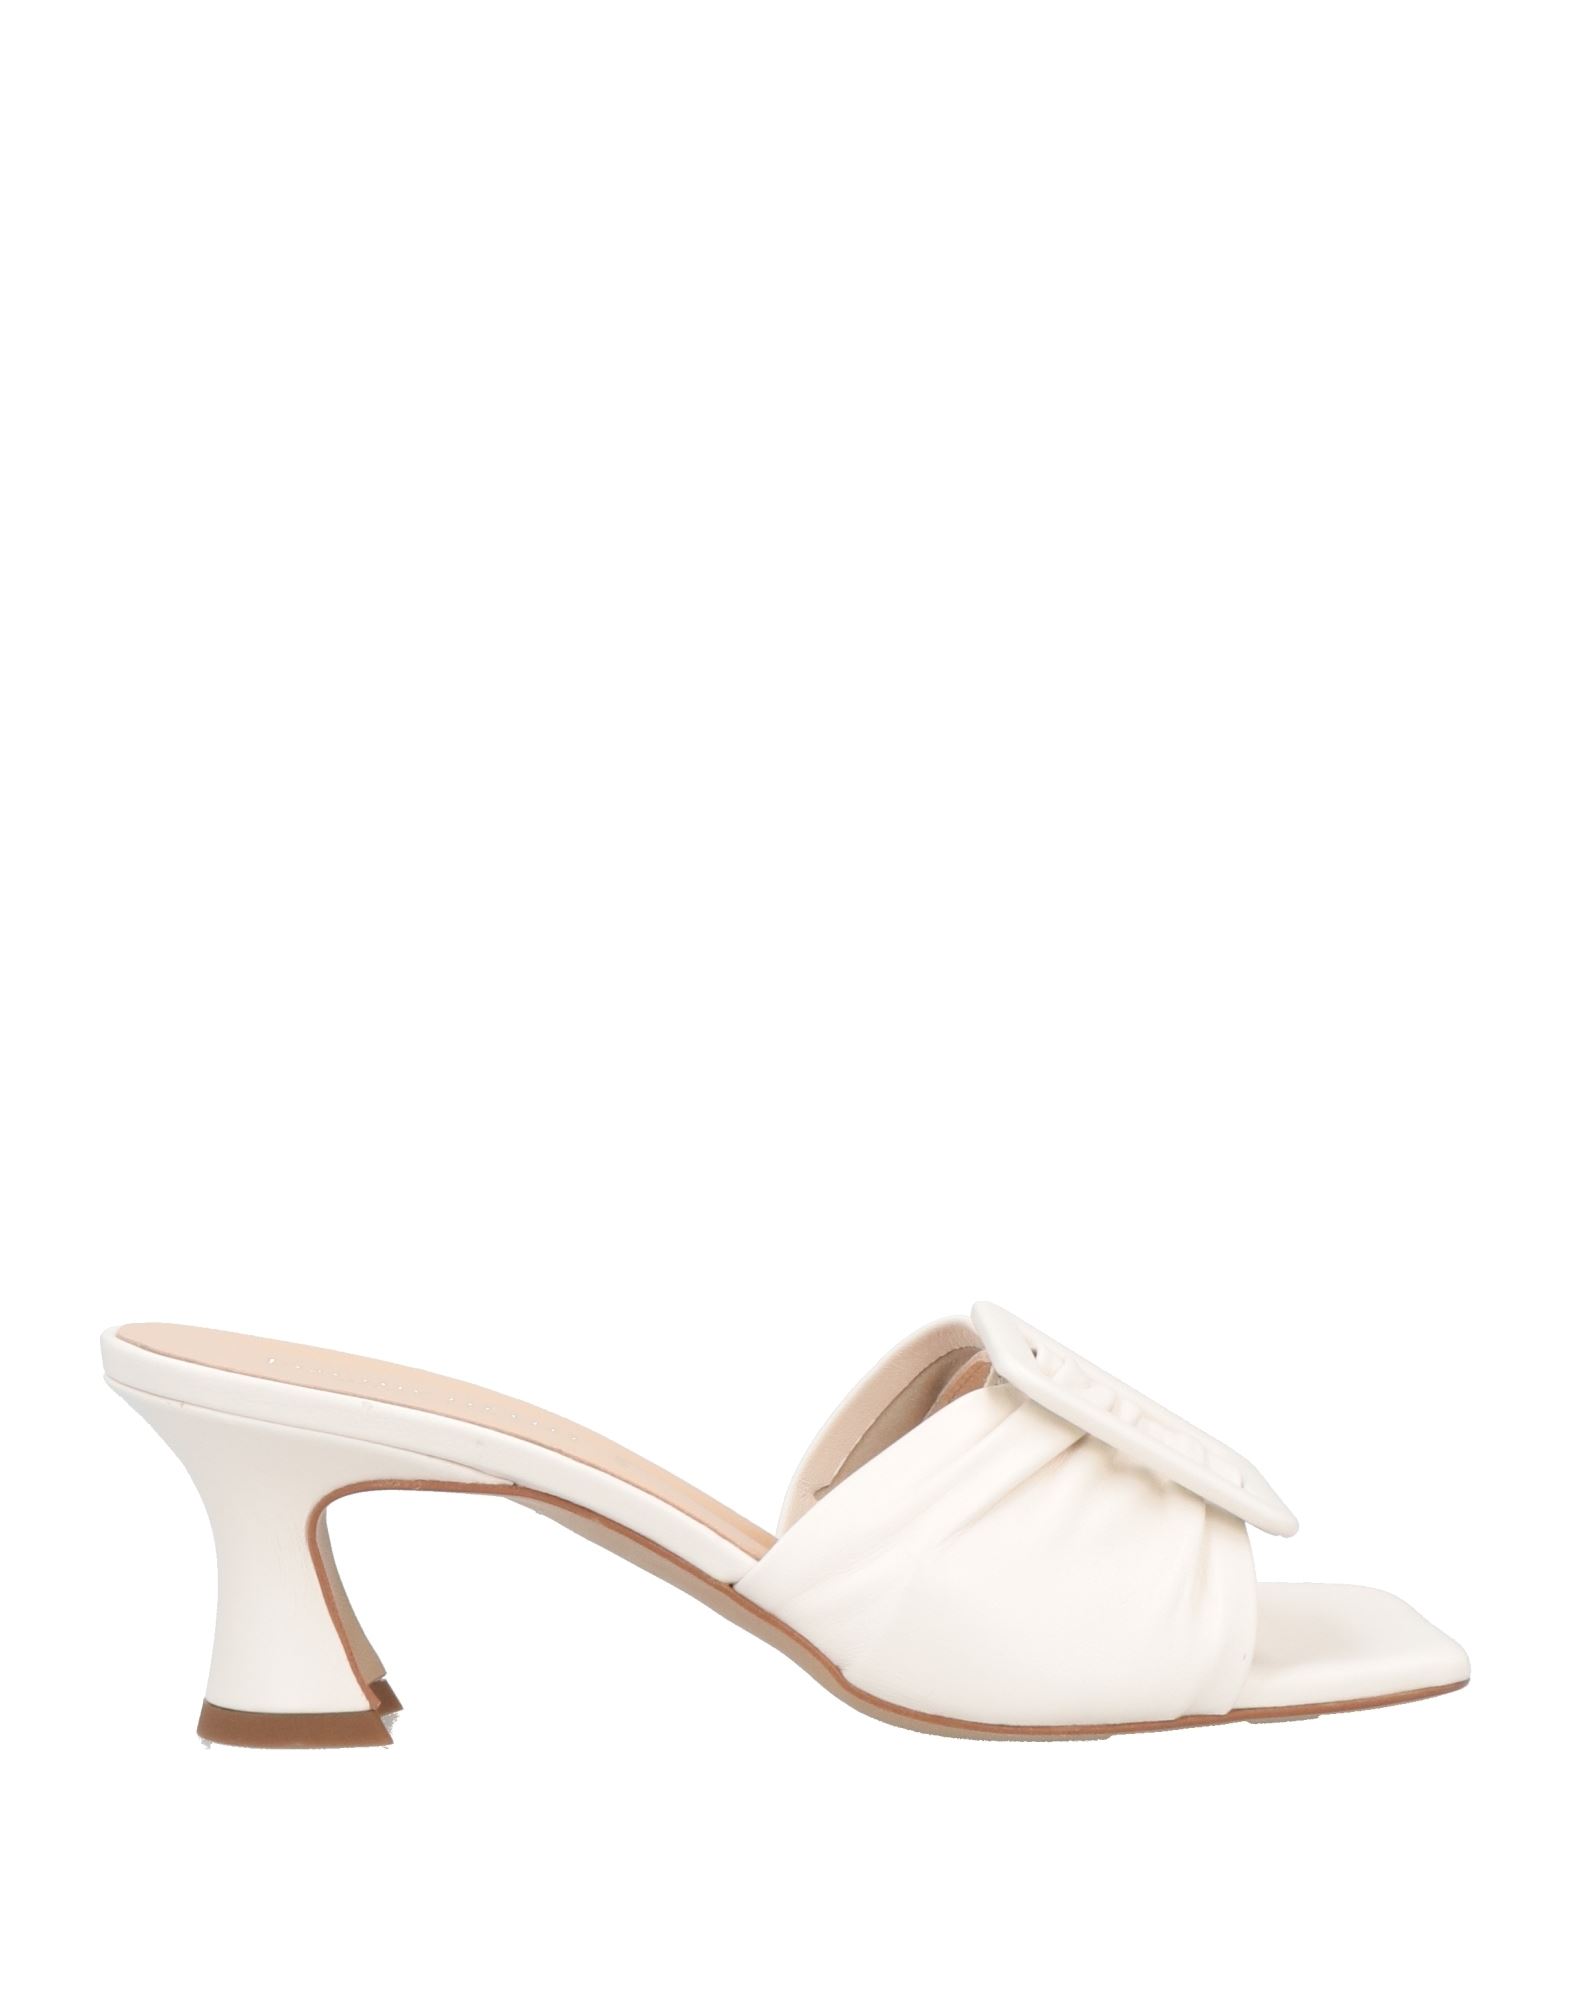 Formentini Sandals In White